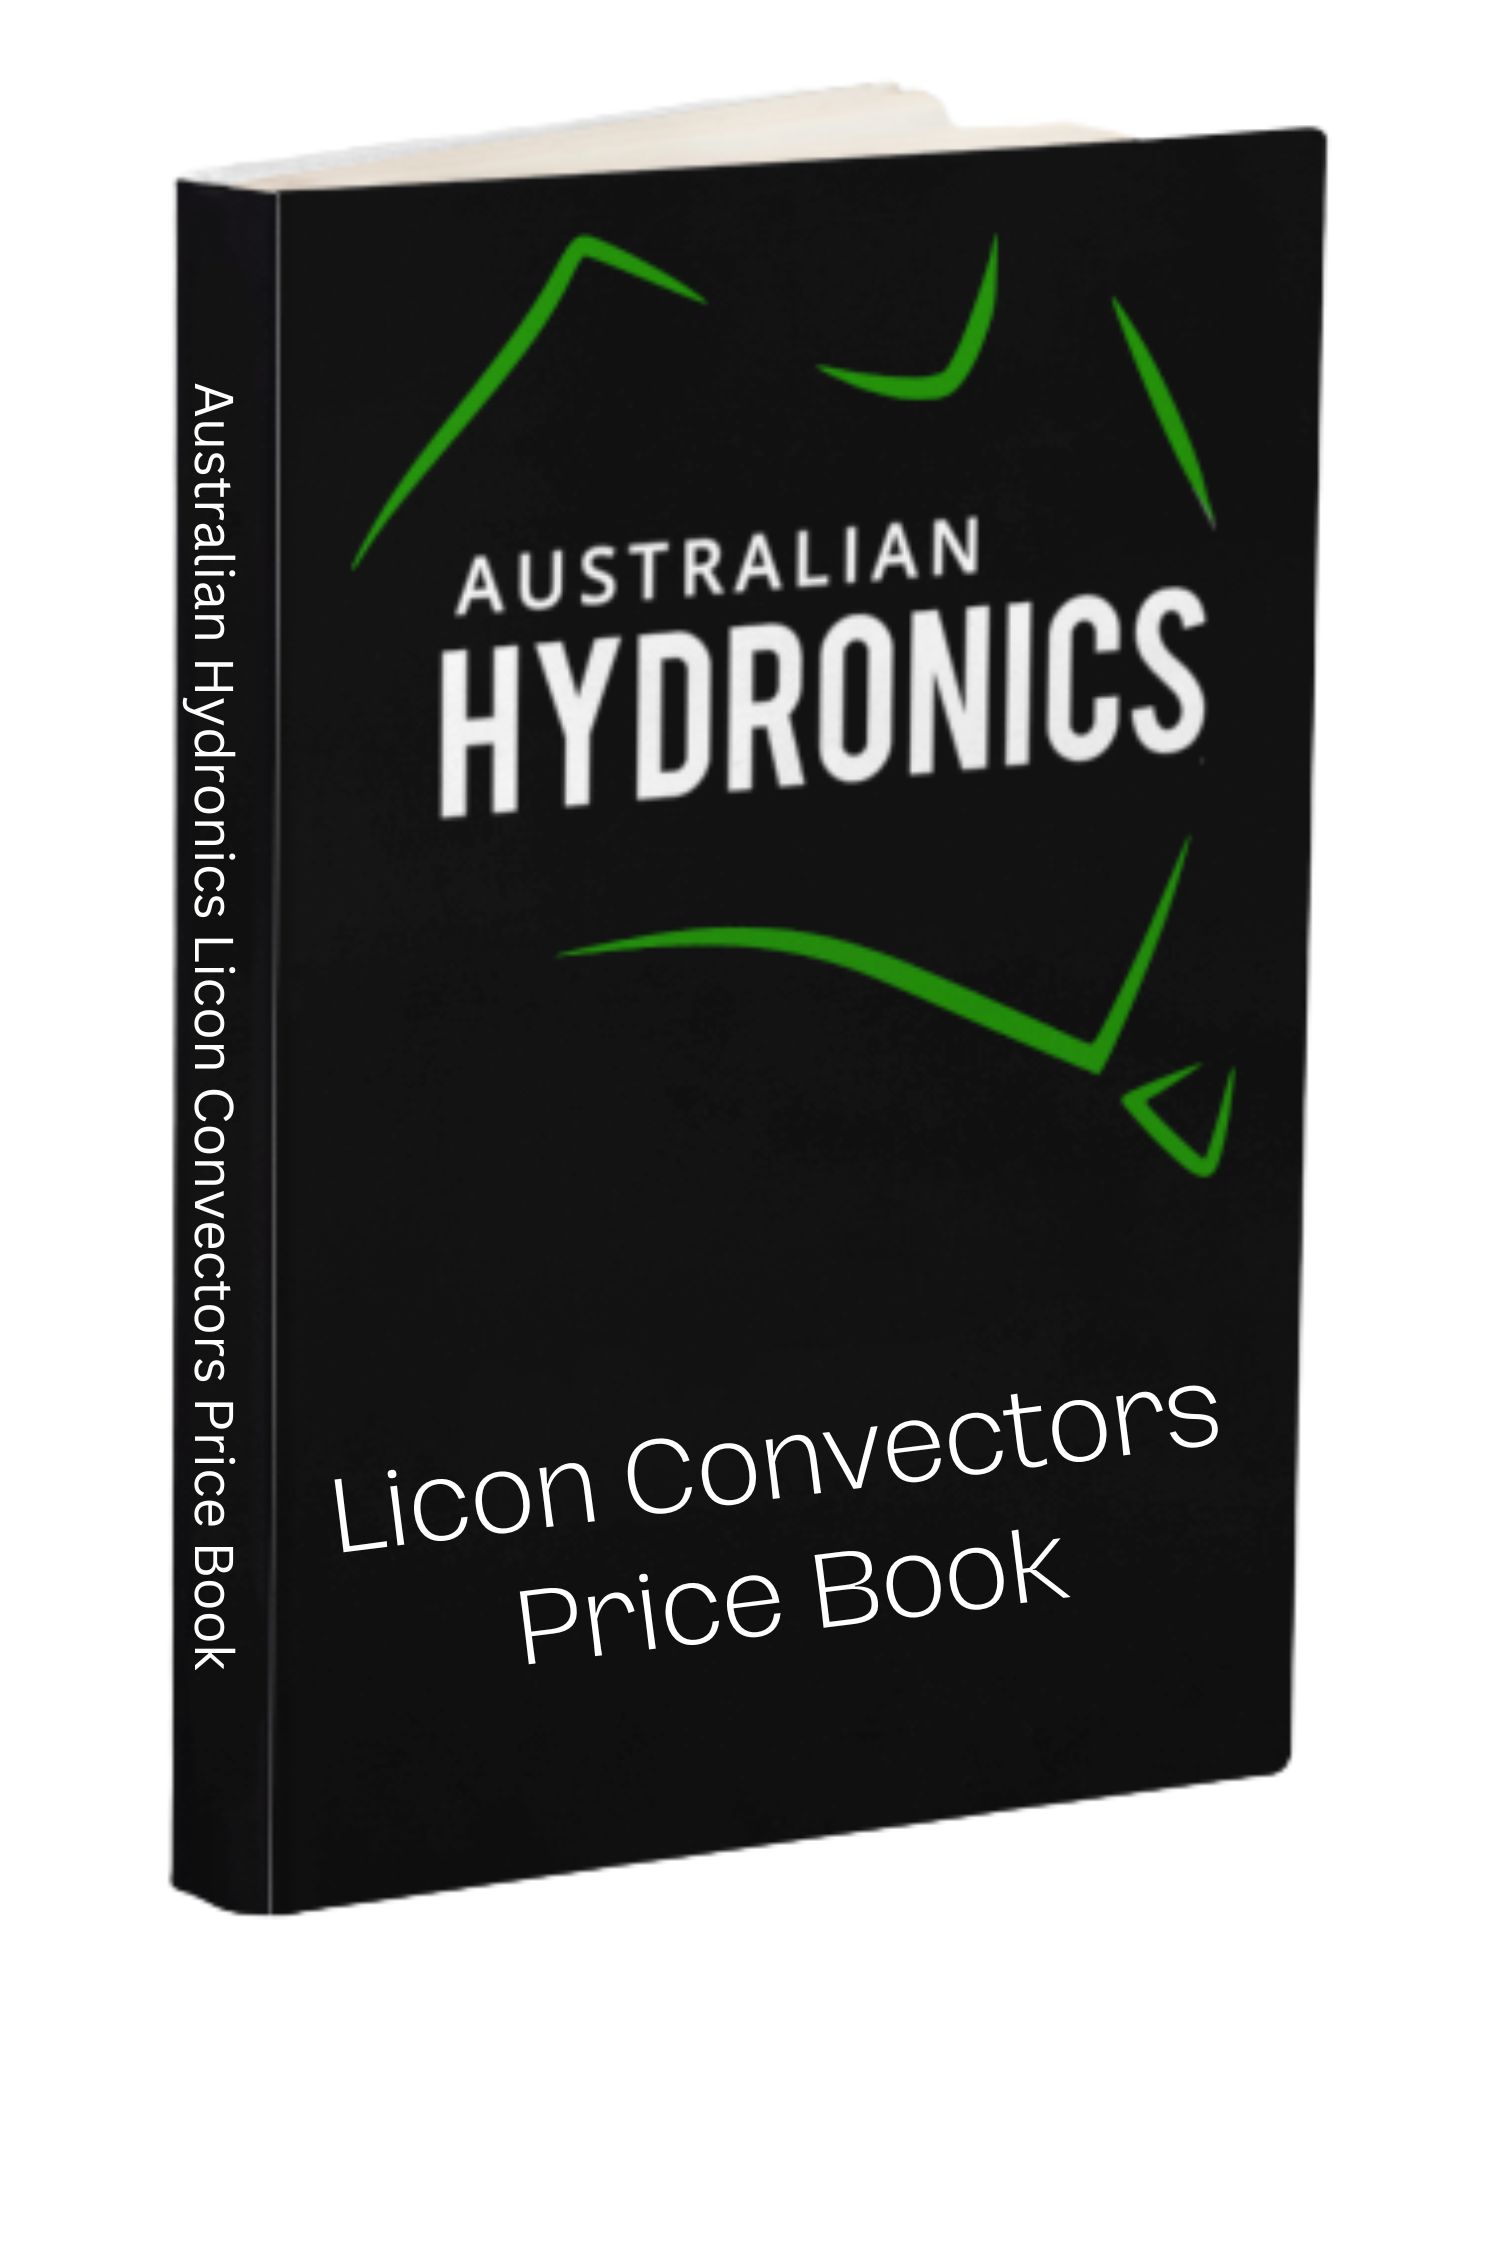 Australian Hydronics Price Book